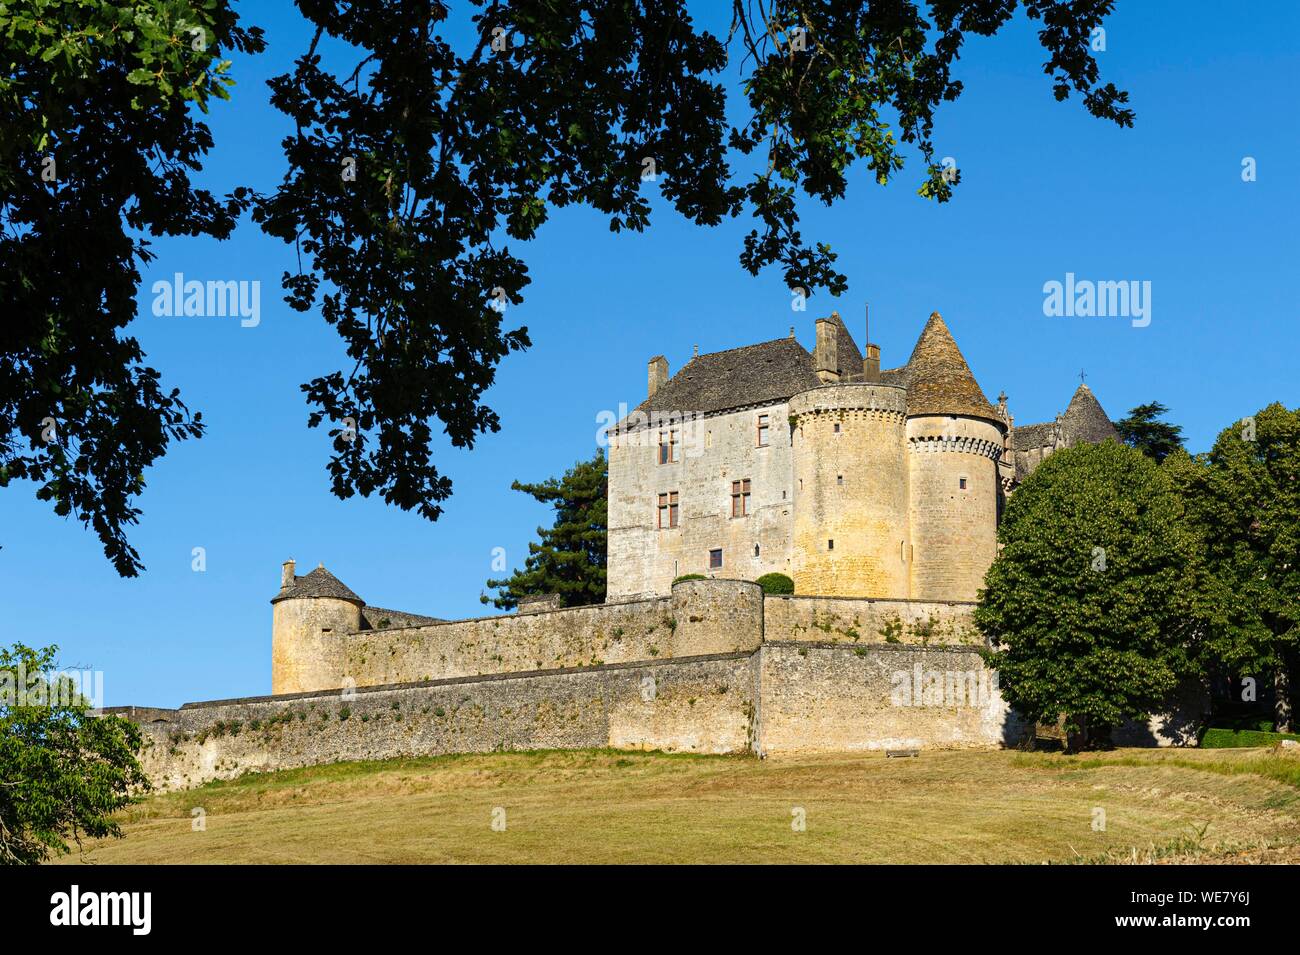 France Dordogne Sainte Mondane Castle Of Fenelon 15th Century